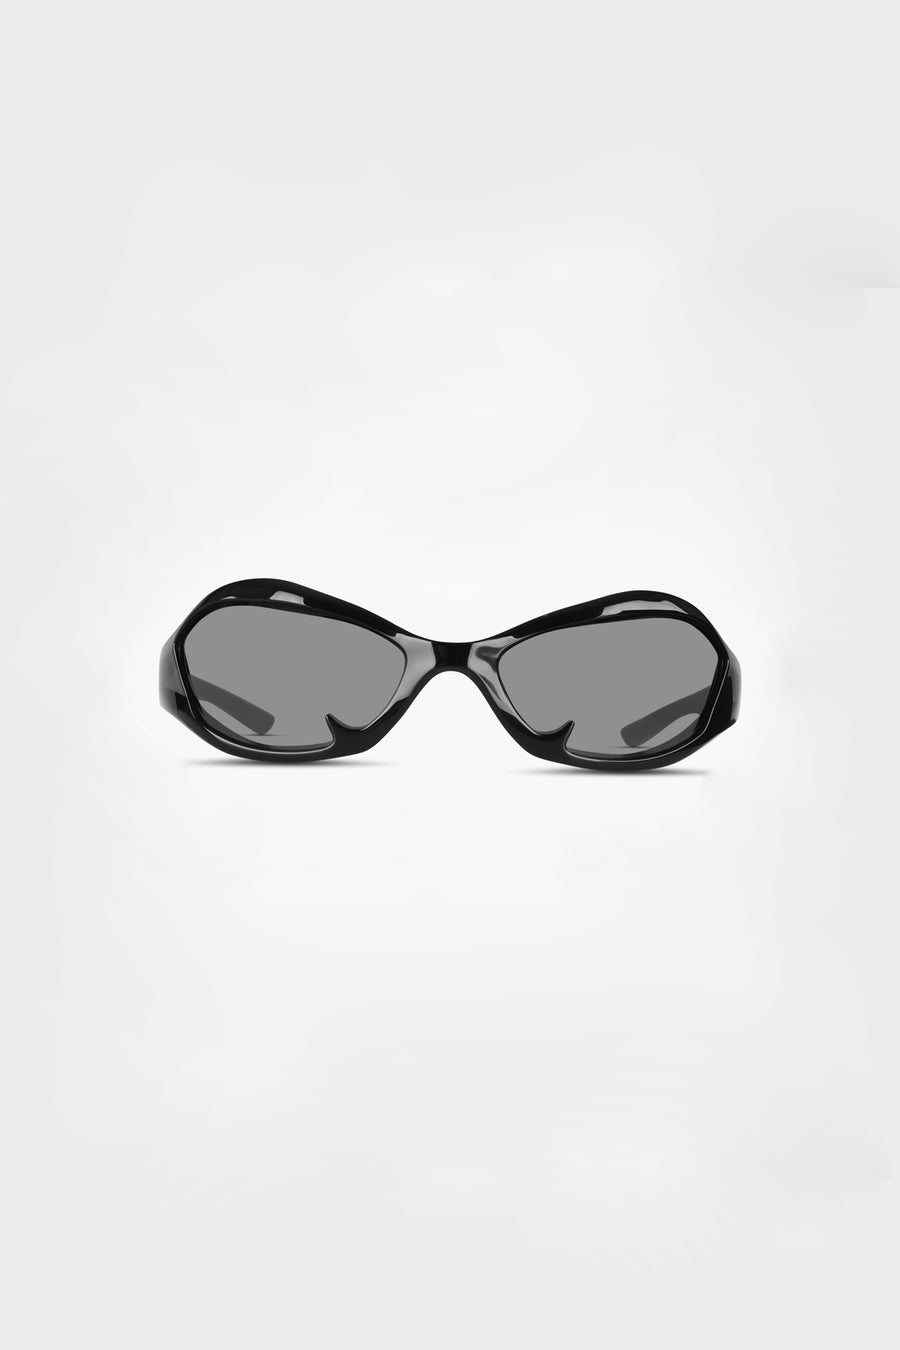 JordanLuca XP1 black sunglasses, inspired by Y2K fashion.